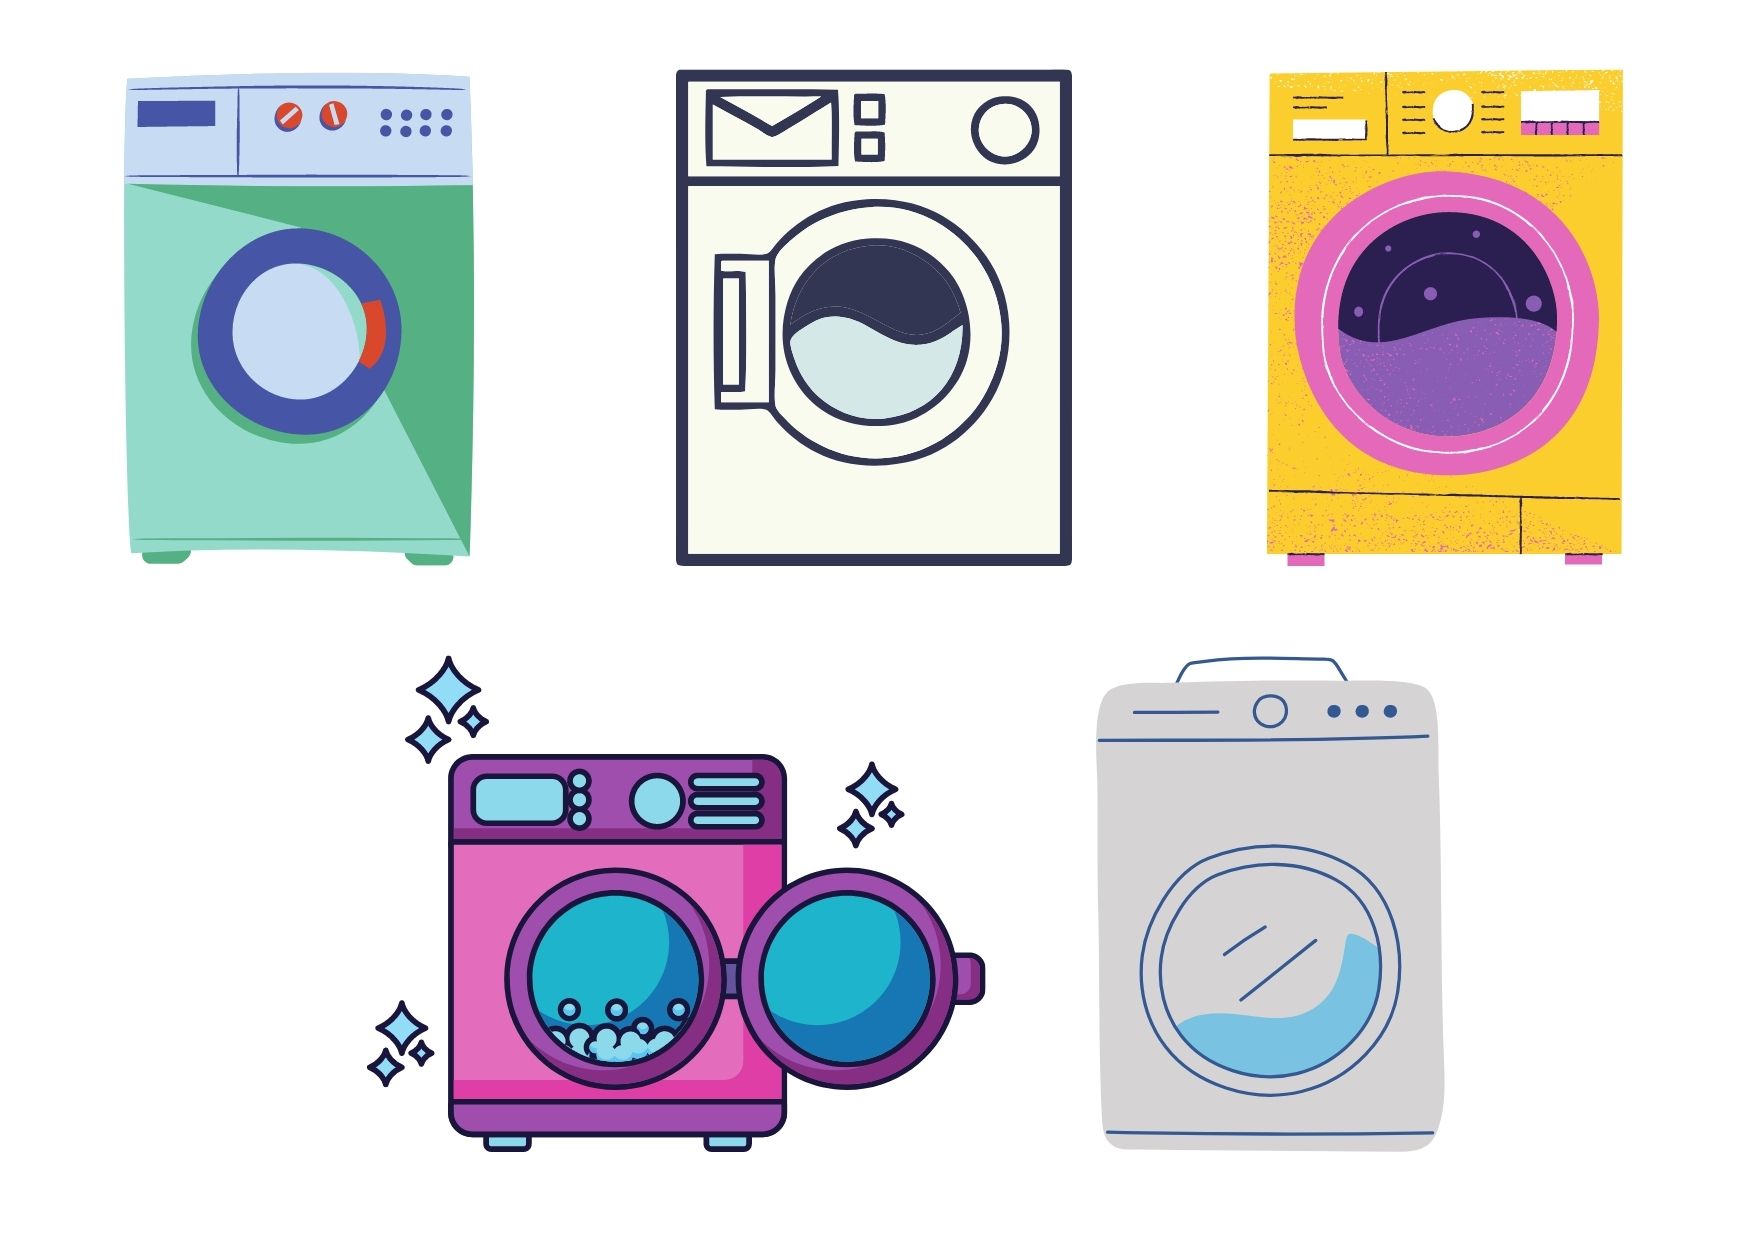 aplikasi laundry IOT